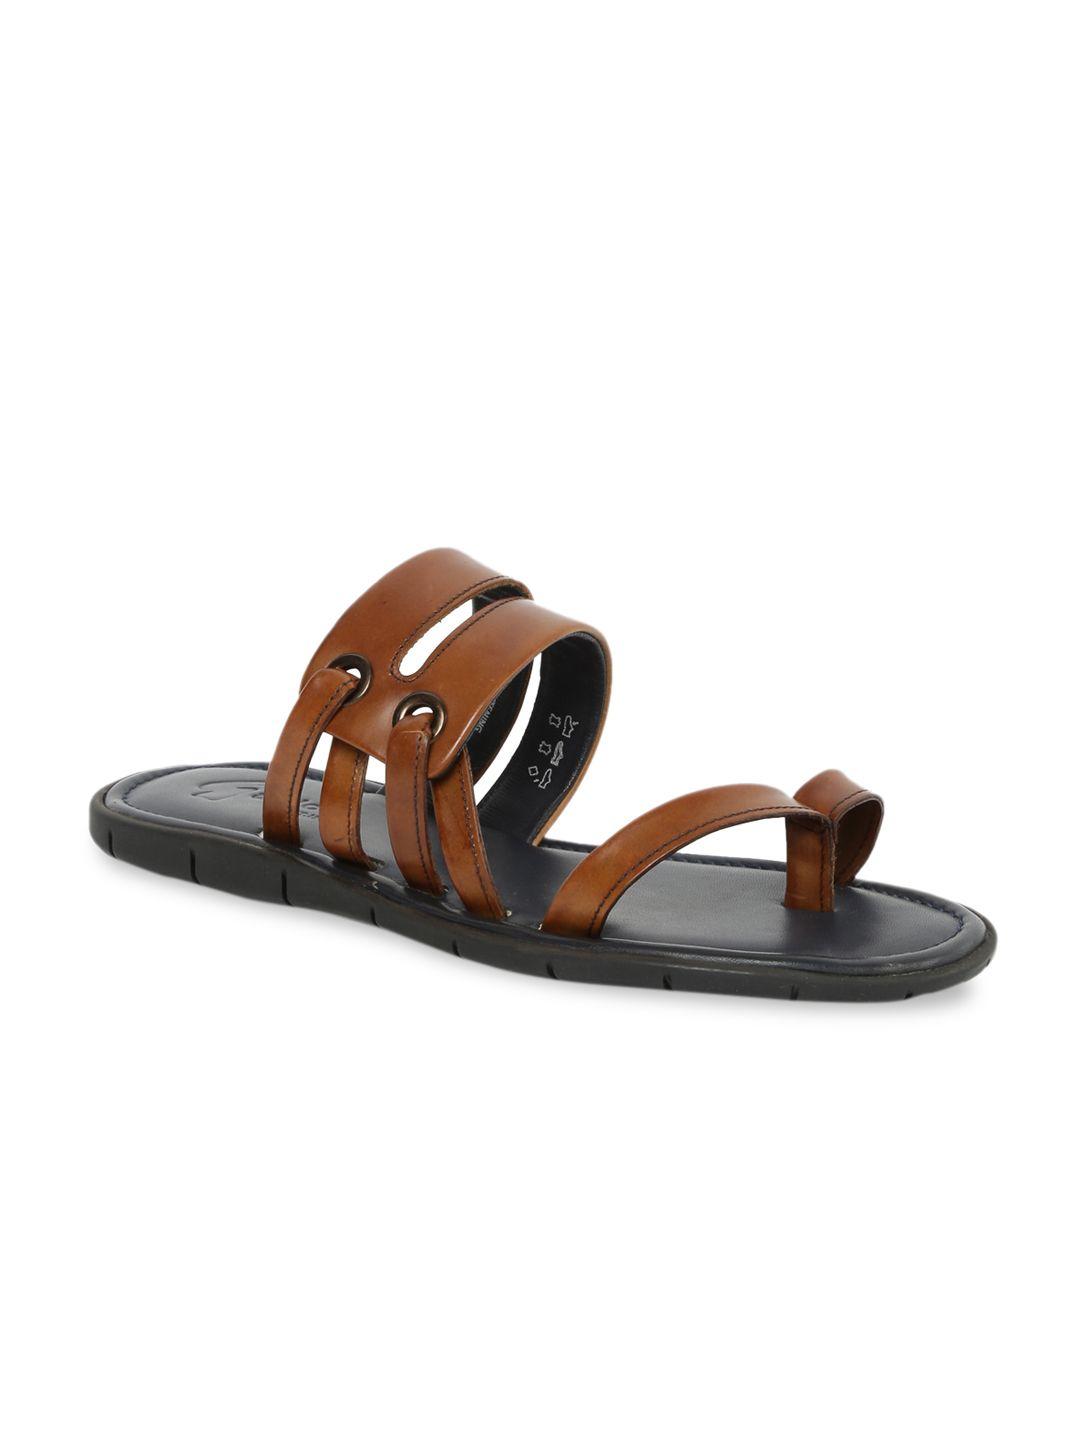 gabicci men tan brown leather comfort sandals